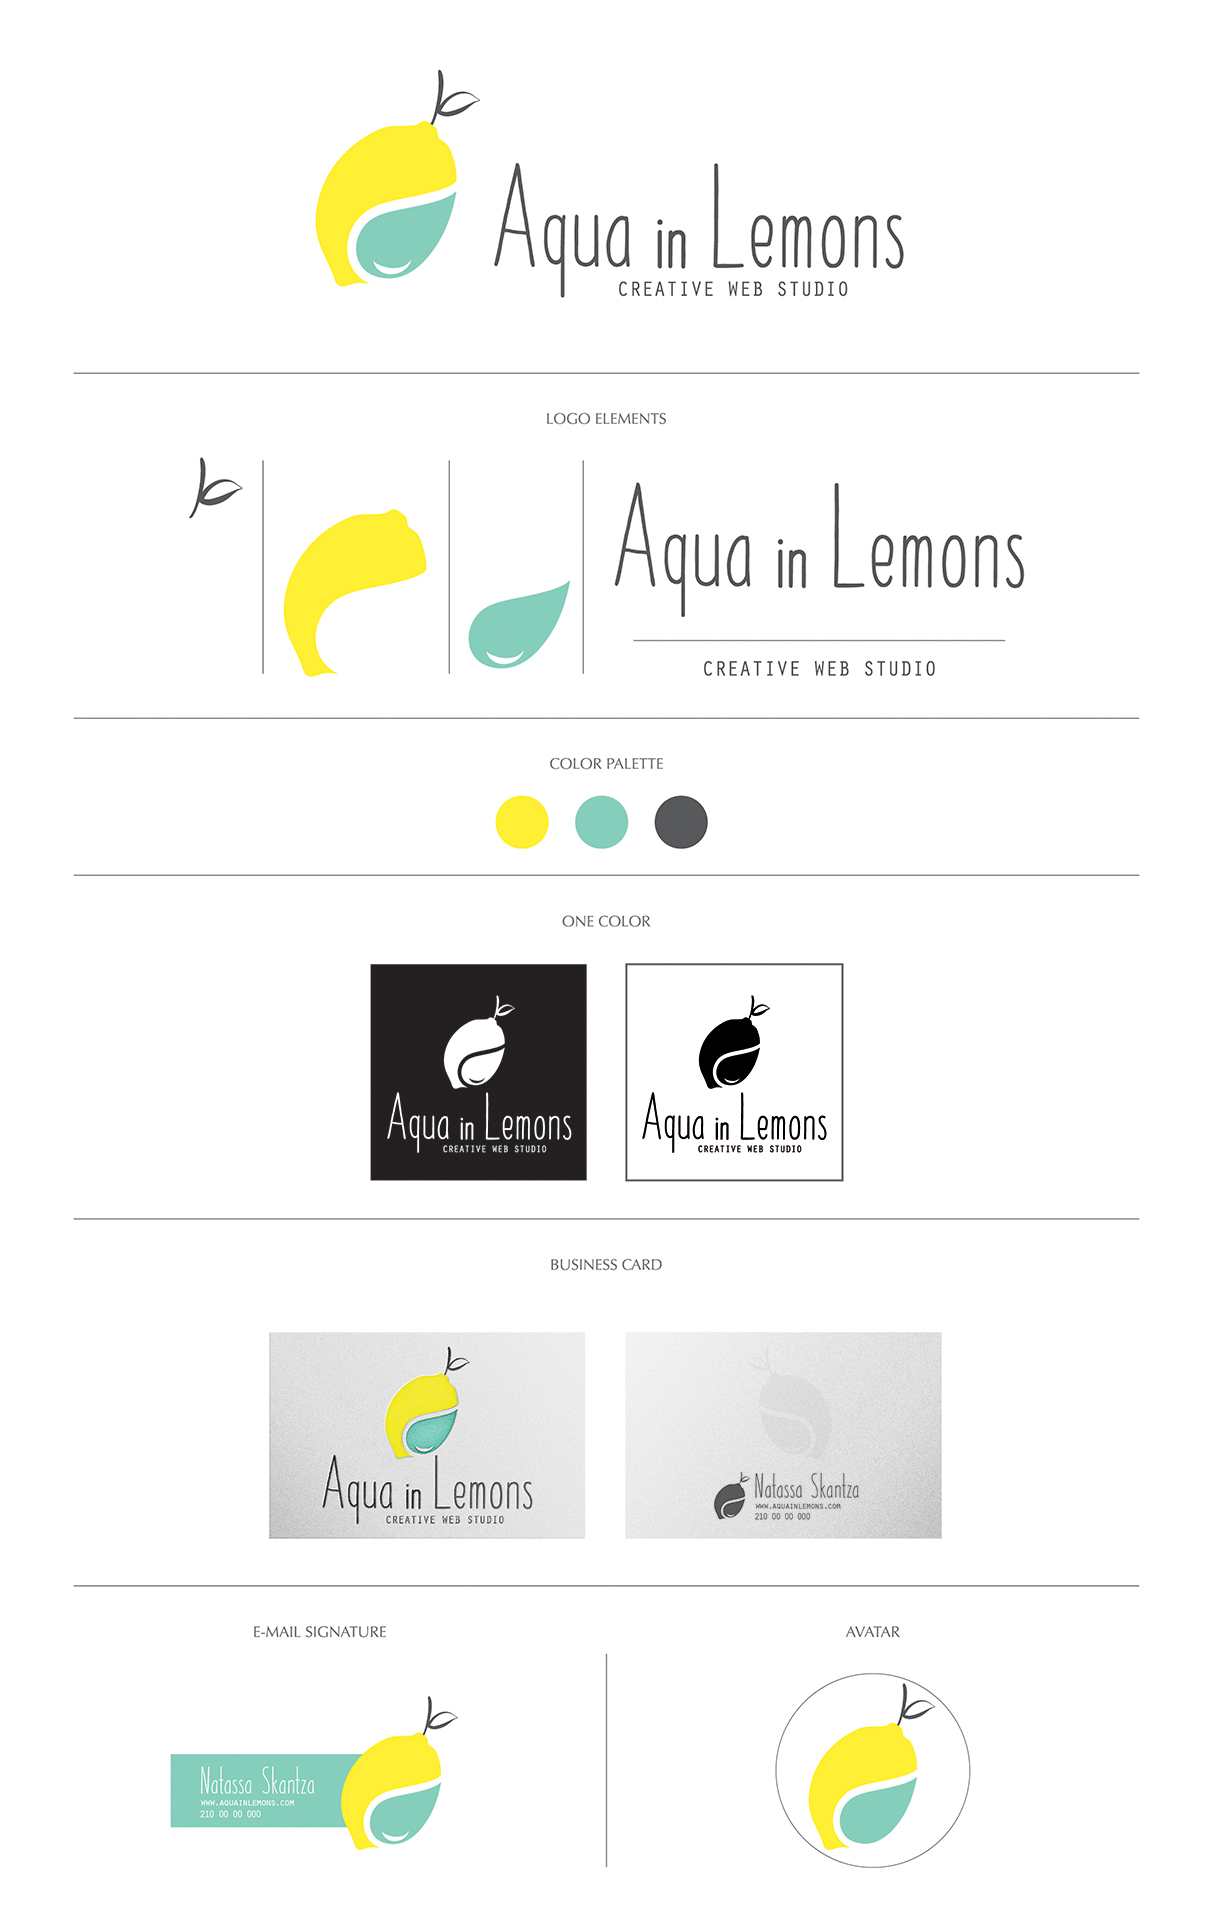 Aqua in lemons - logo presentation